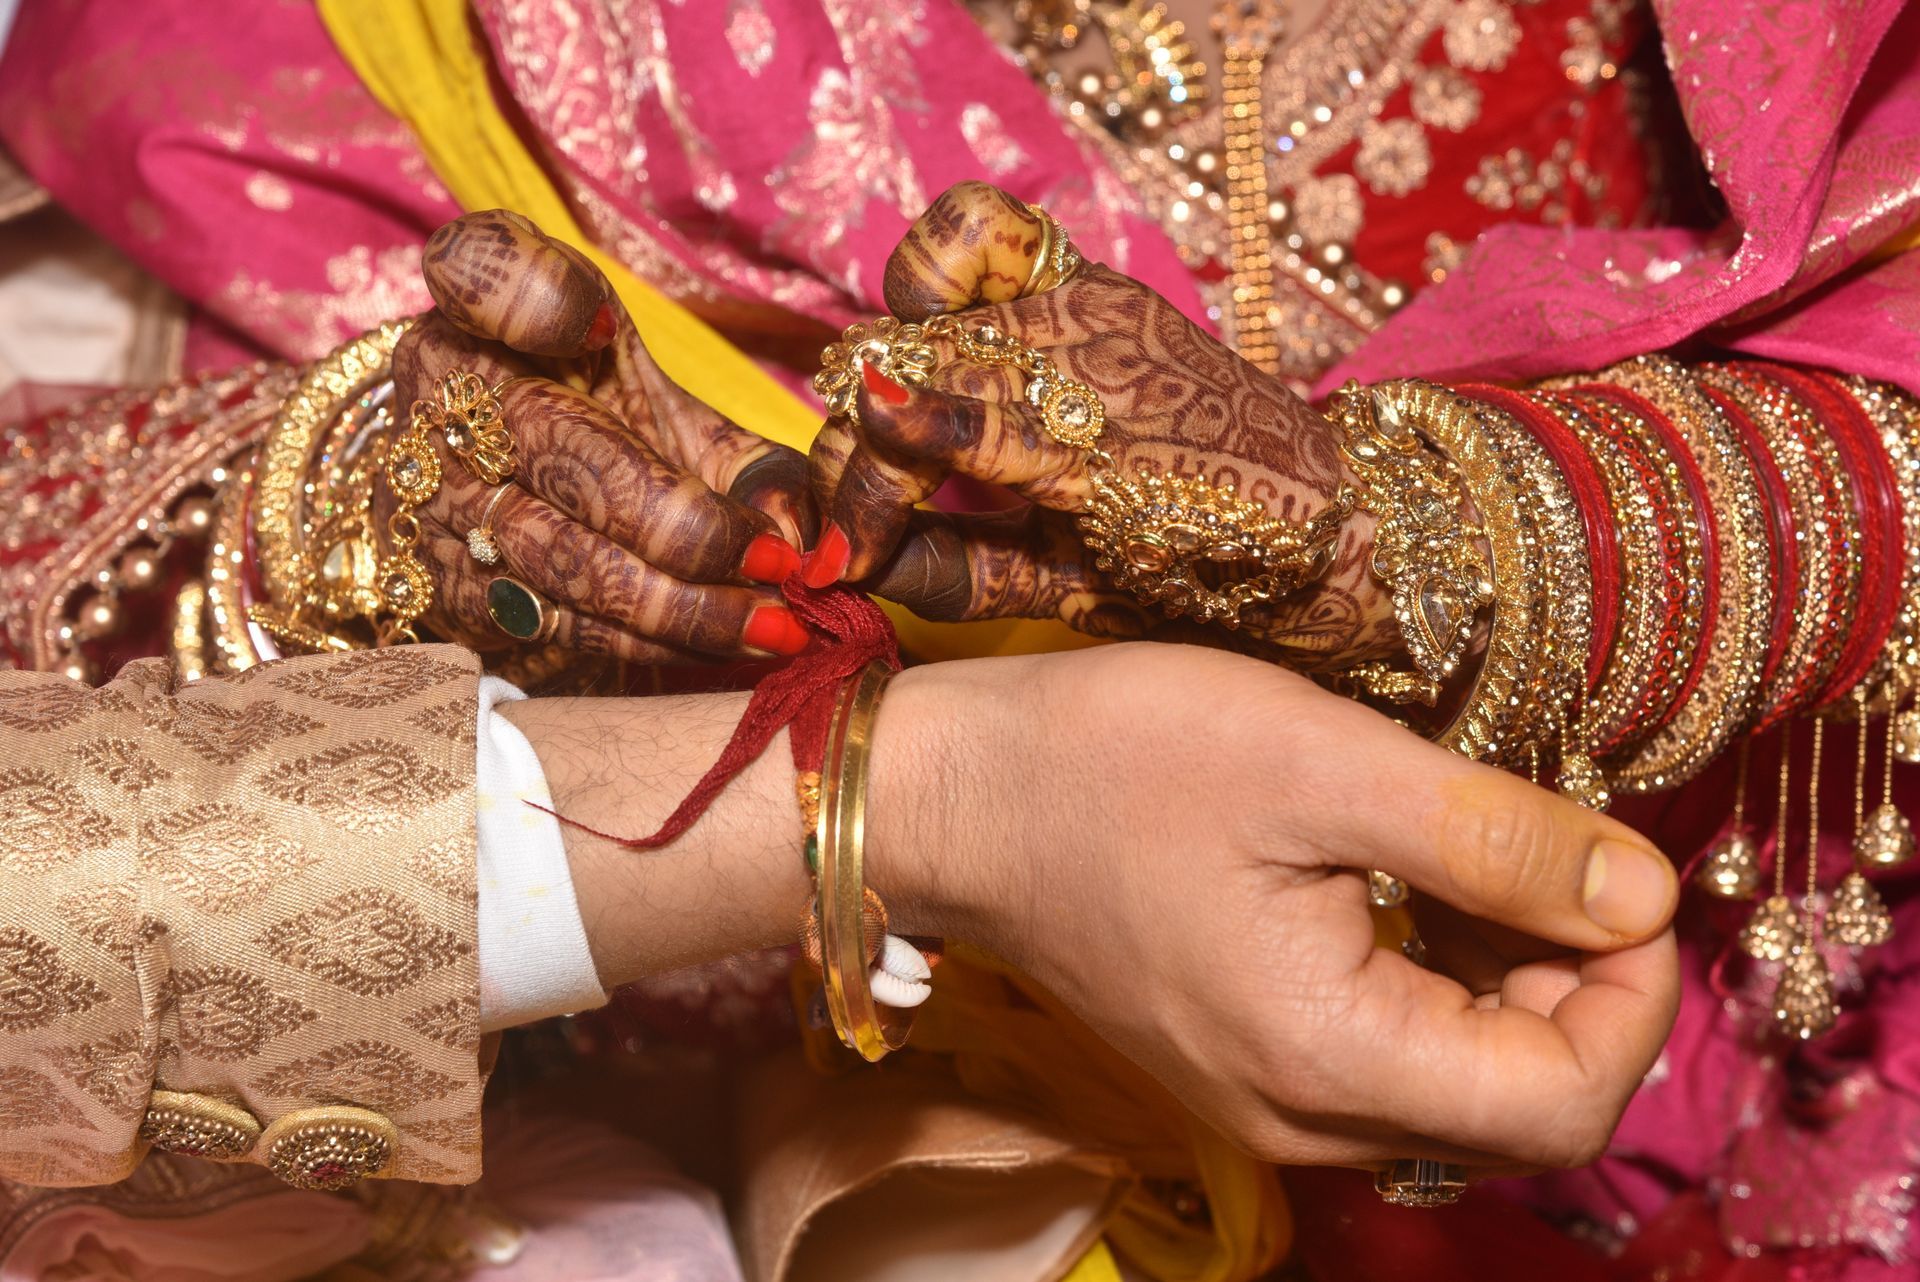 Mangalsutra knots being tied at Hindu wedding